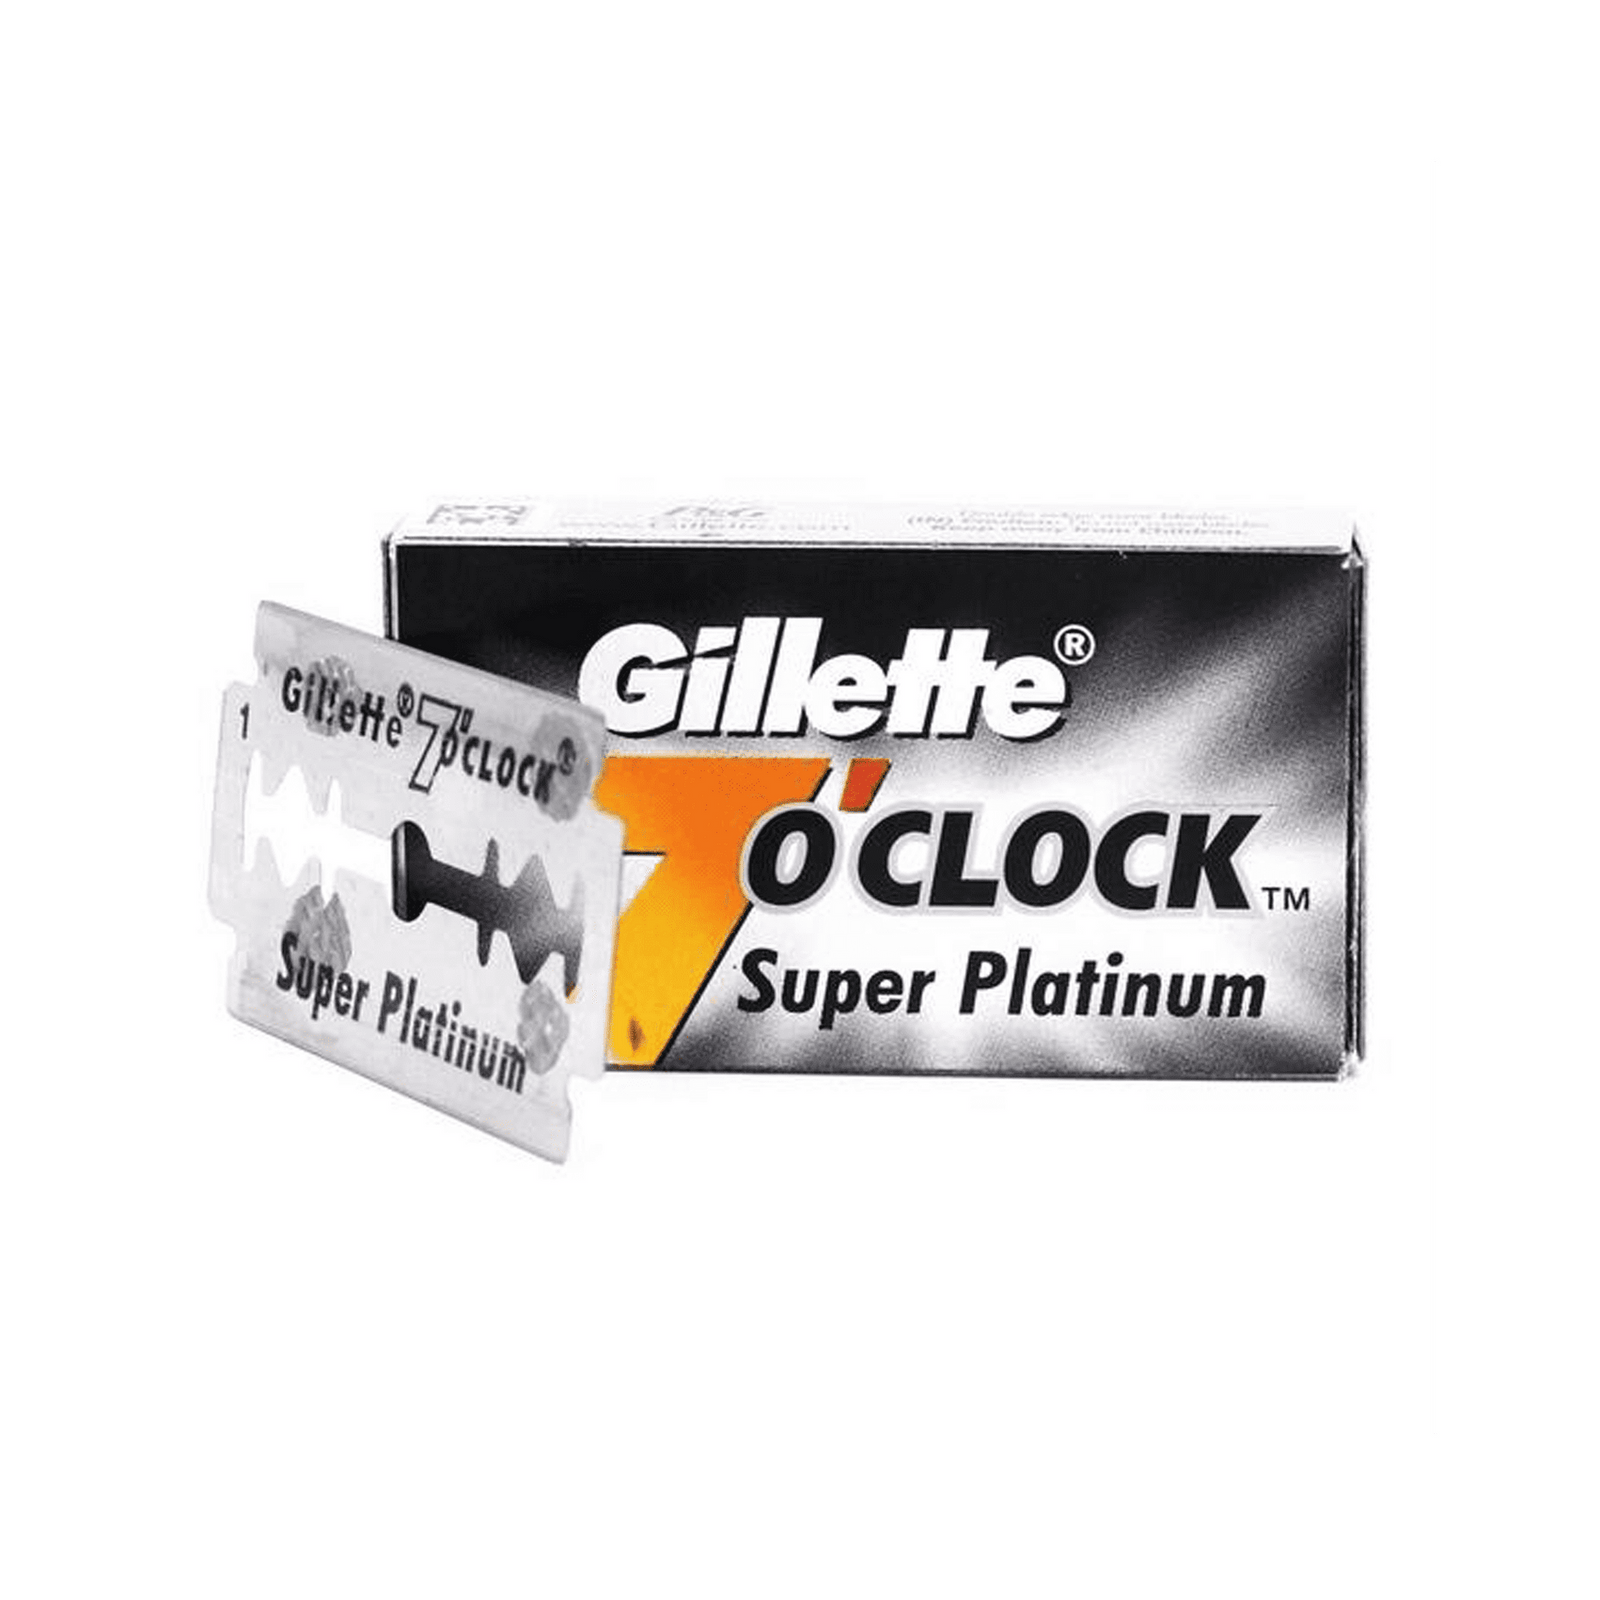 Gillette 7 O'Clock Super Platinum Black Double Edge Razor Blades, 10 Pack